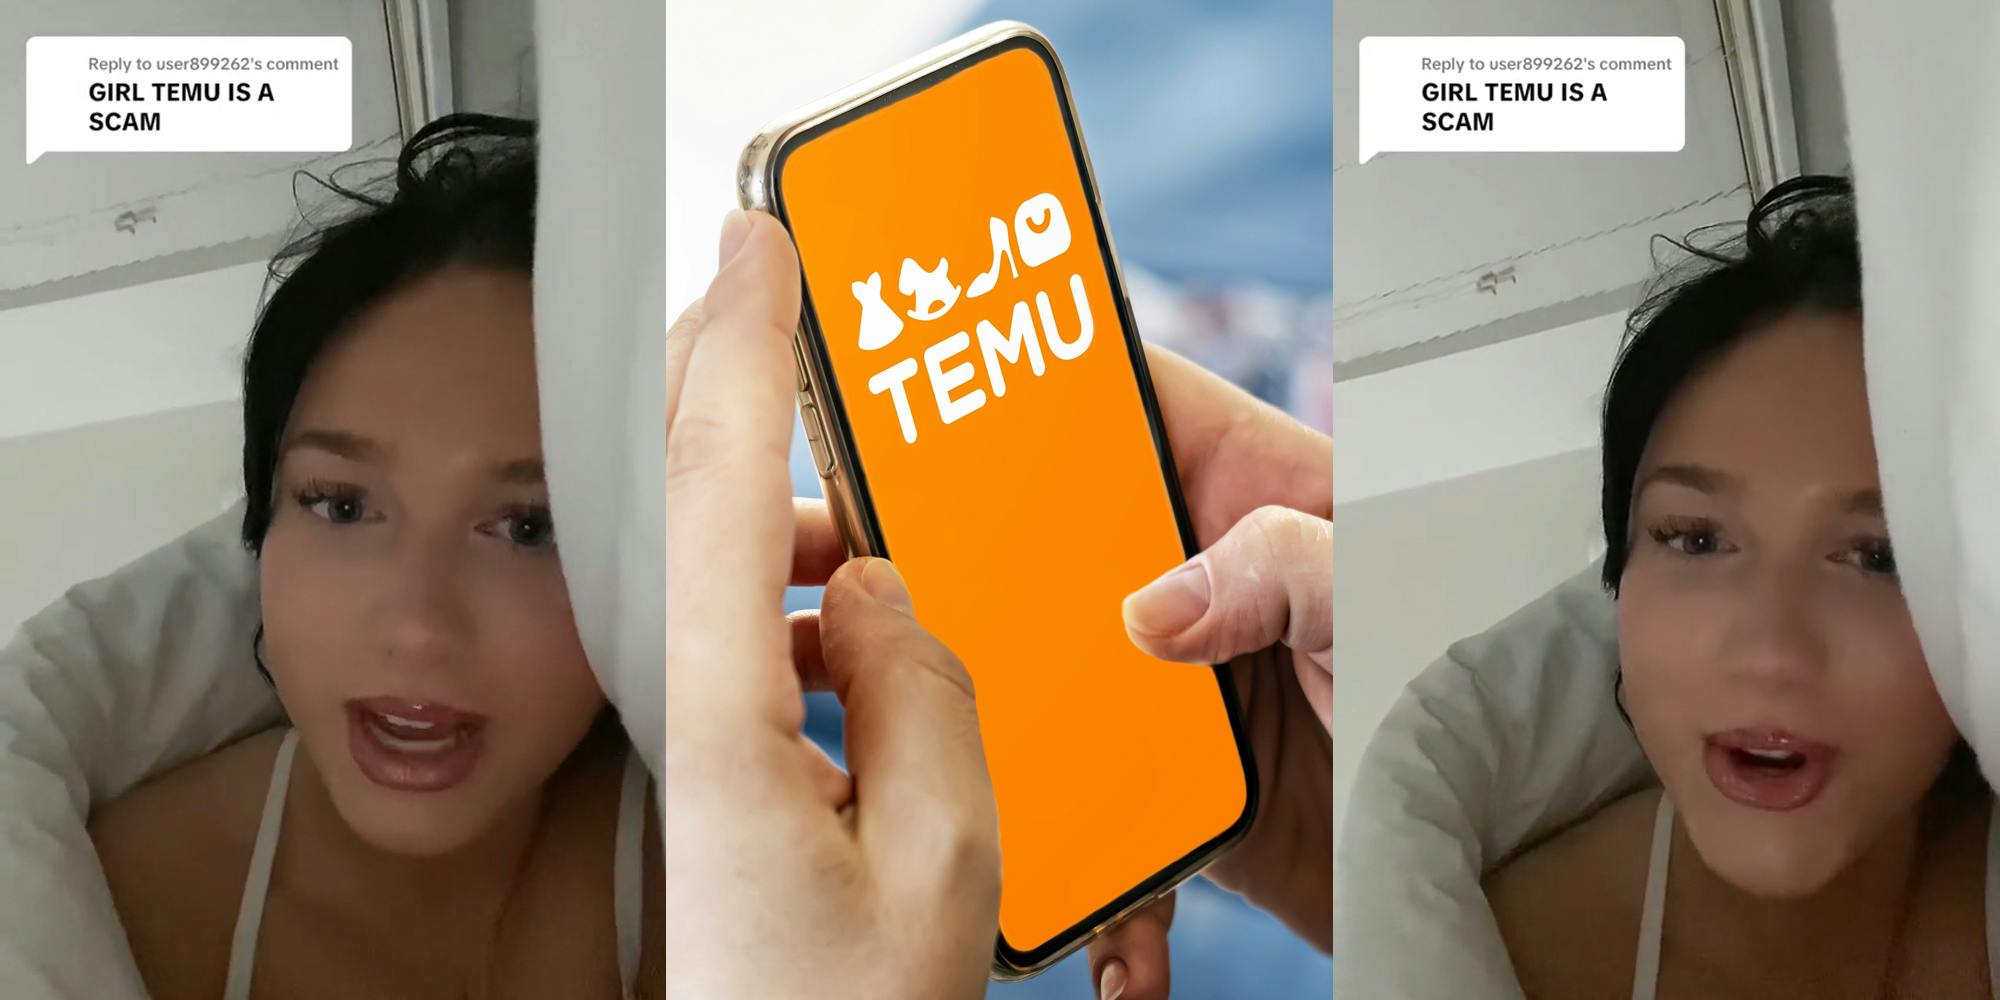 Temu customer speaking in bed with caption "GIRL TEMU IS A SCAM" (l) Temu on phone screen in hands (c) Temu customer speaking in bed with caption "GIRL TEMU IS A SCAM" (r)